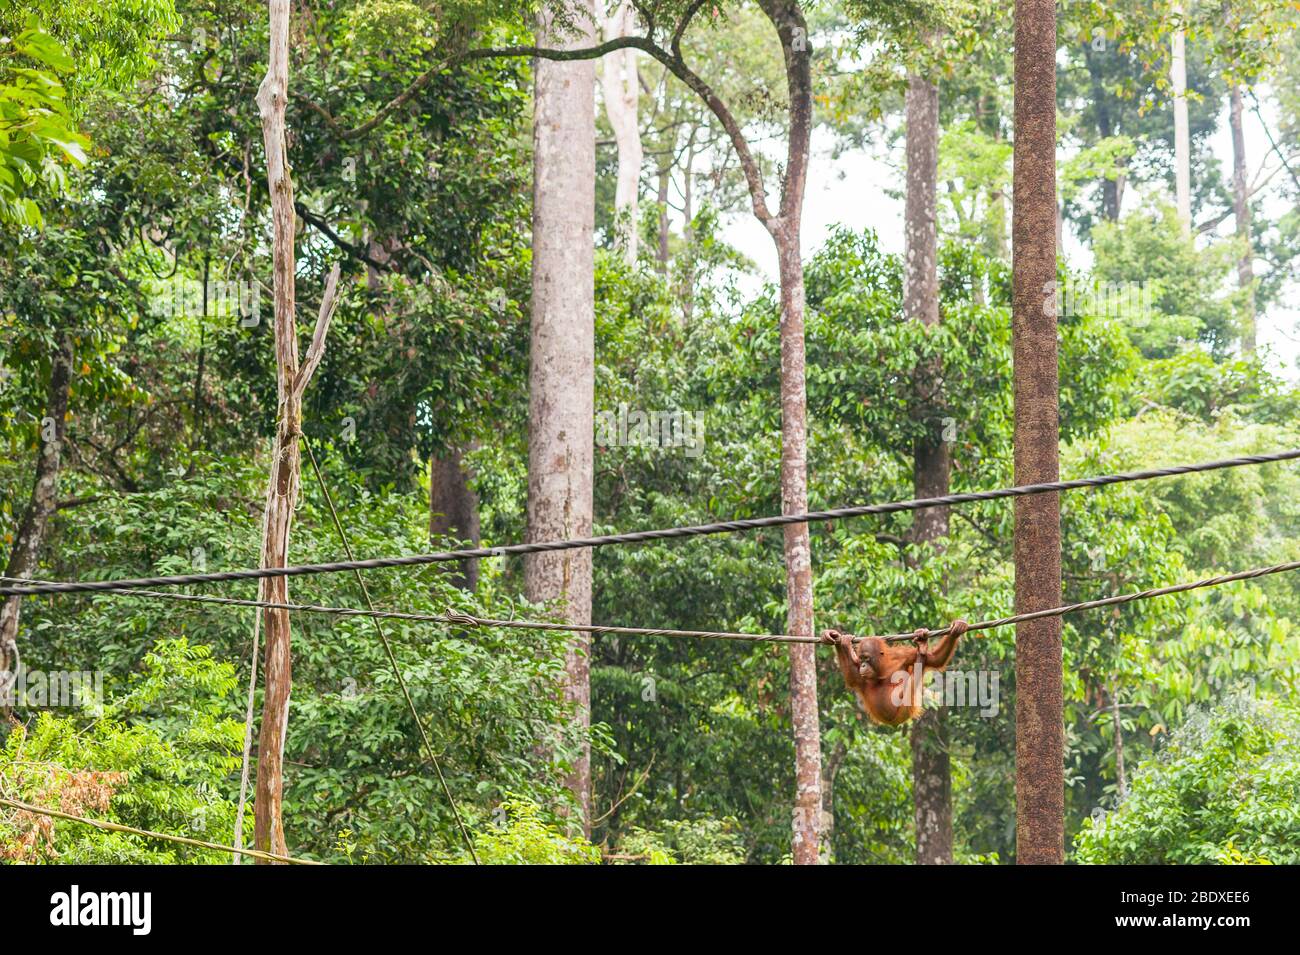 Orangutan on a wire, Sepilok Orangutan Rehabilitation Centre, Sabah, Malaysia, Borneo Stock Photo